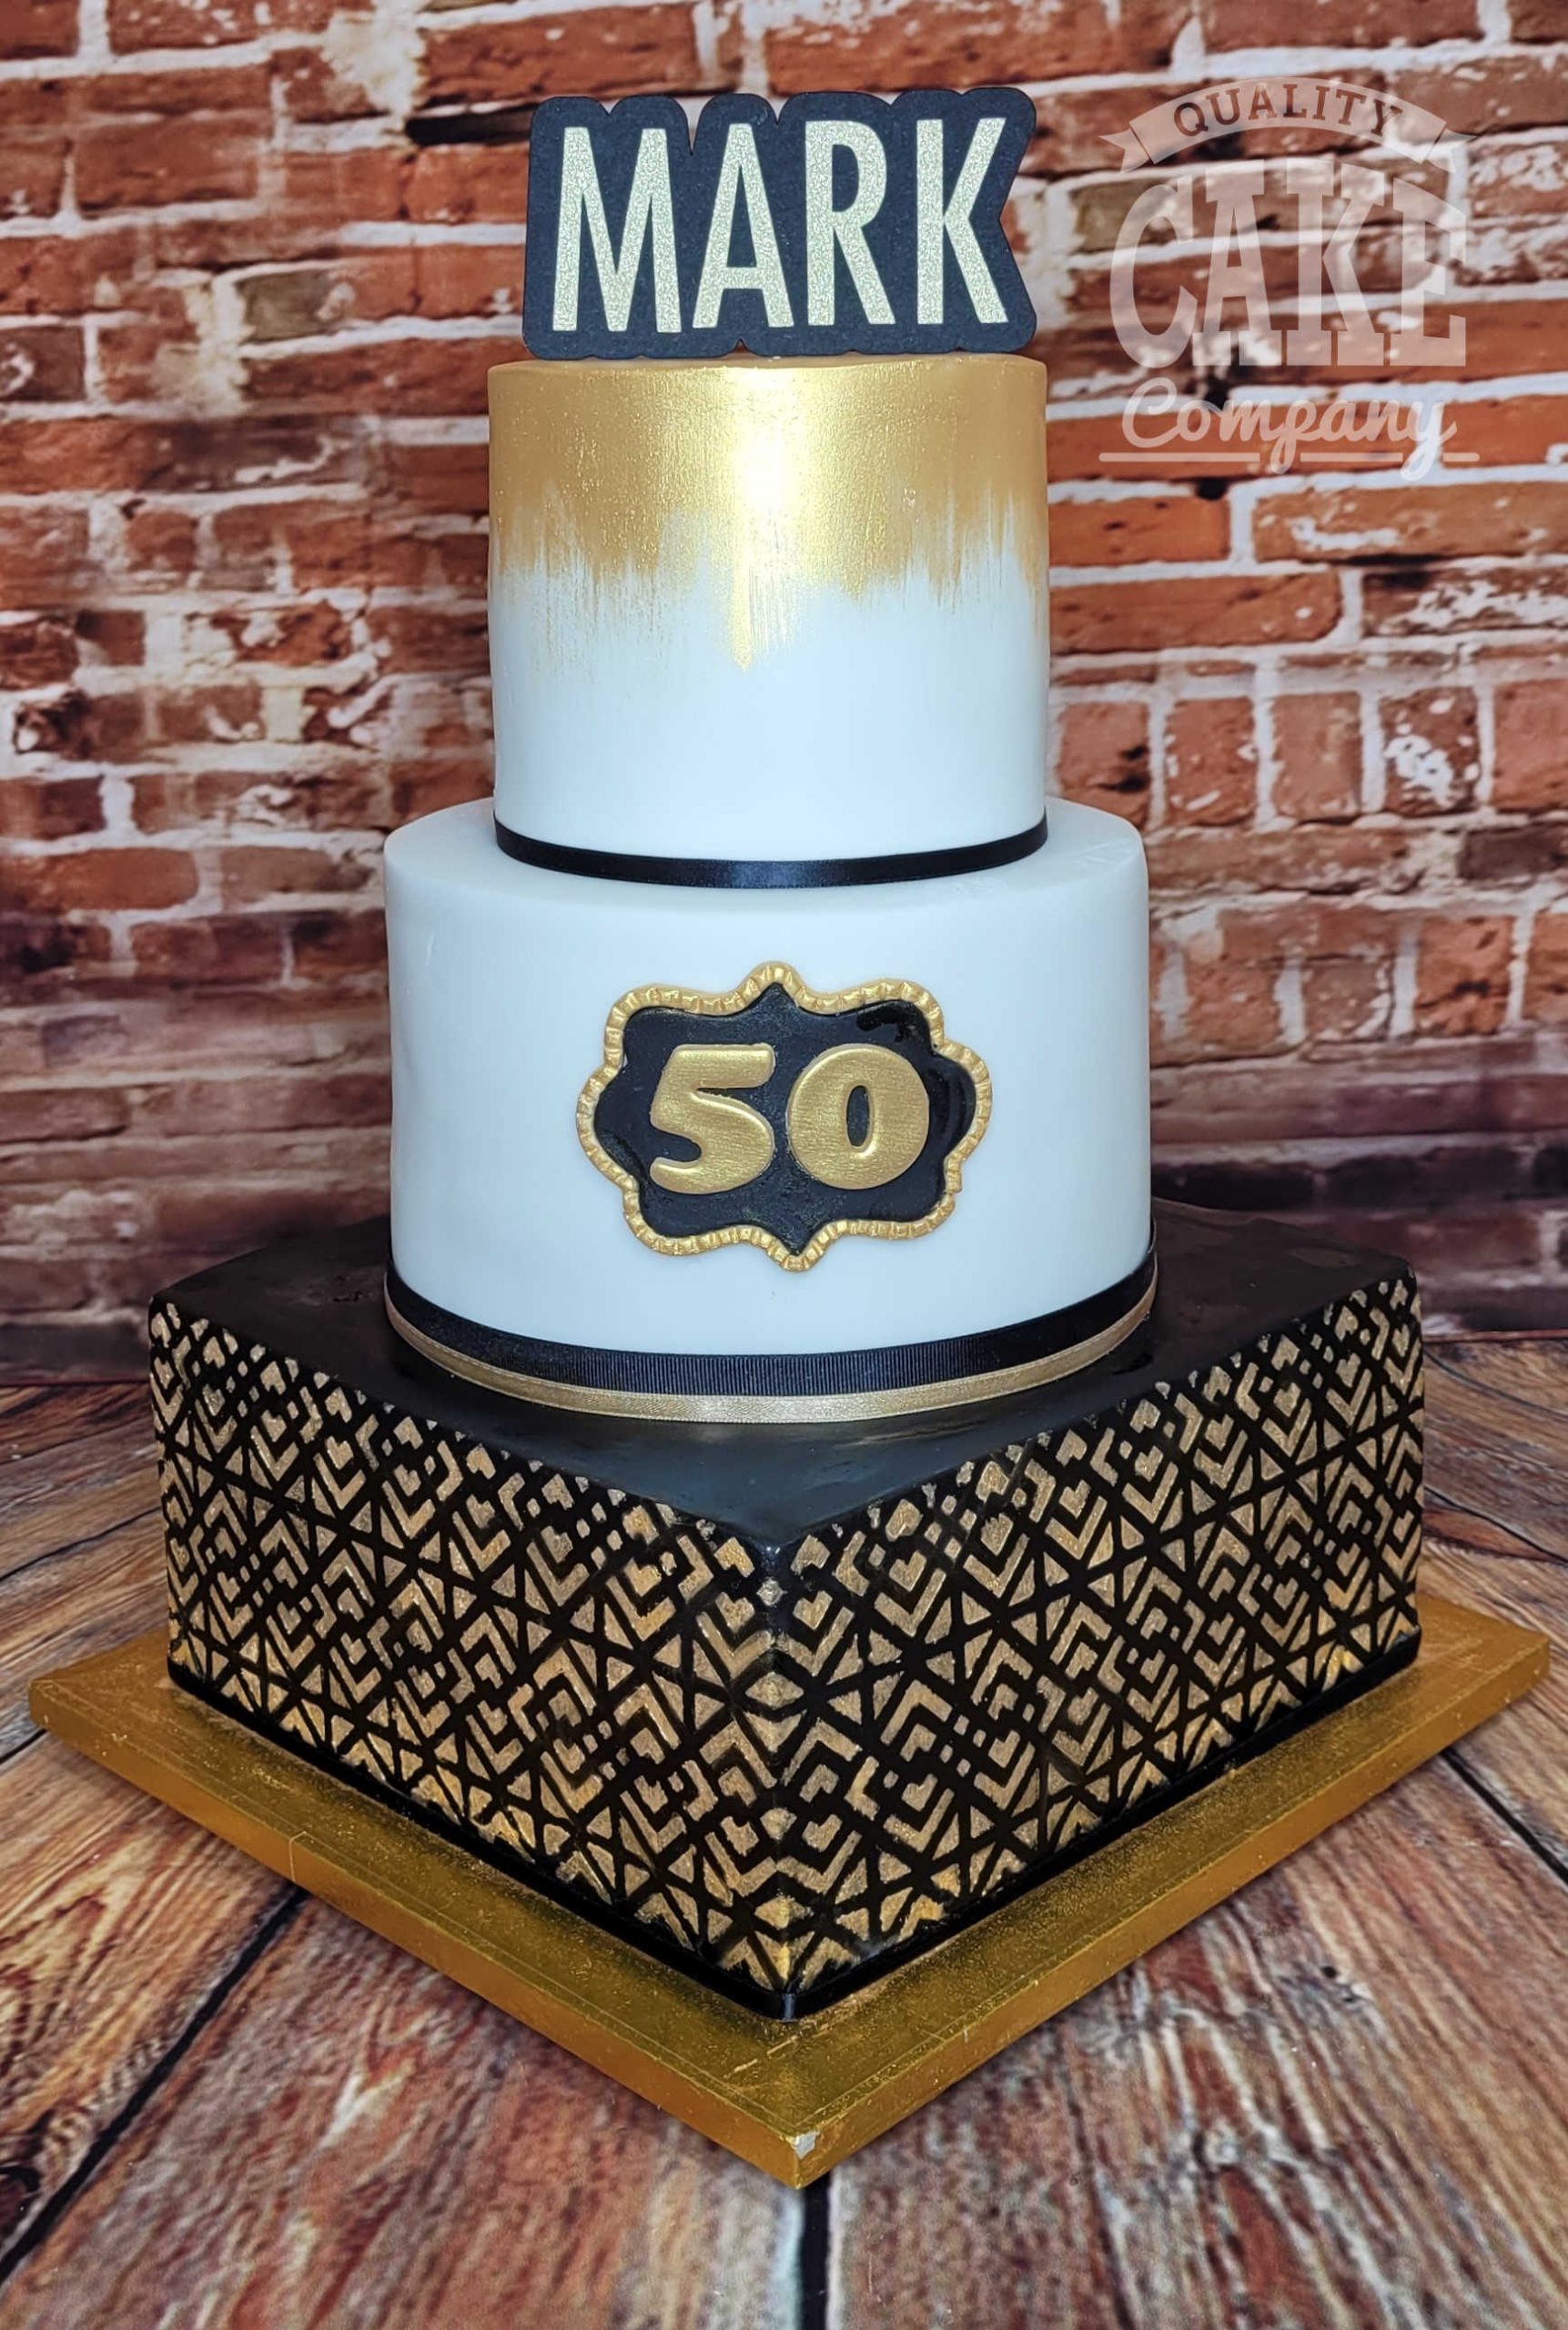 50th Birthday Cakes - Quality Cake Company - Tamworth